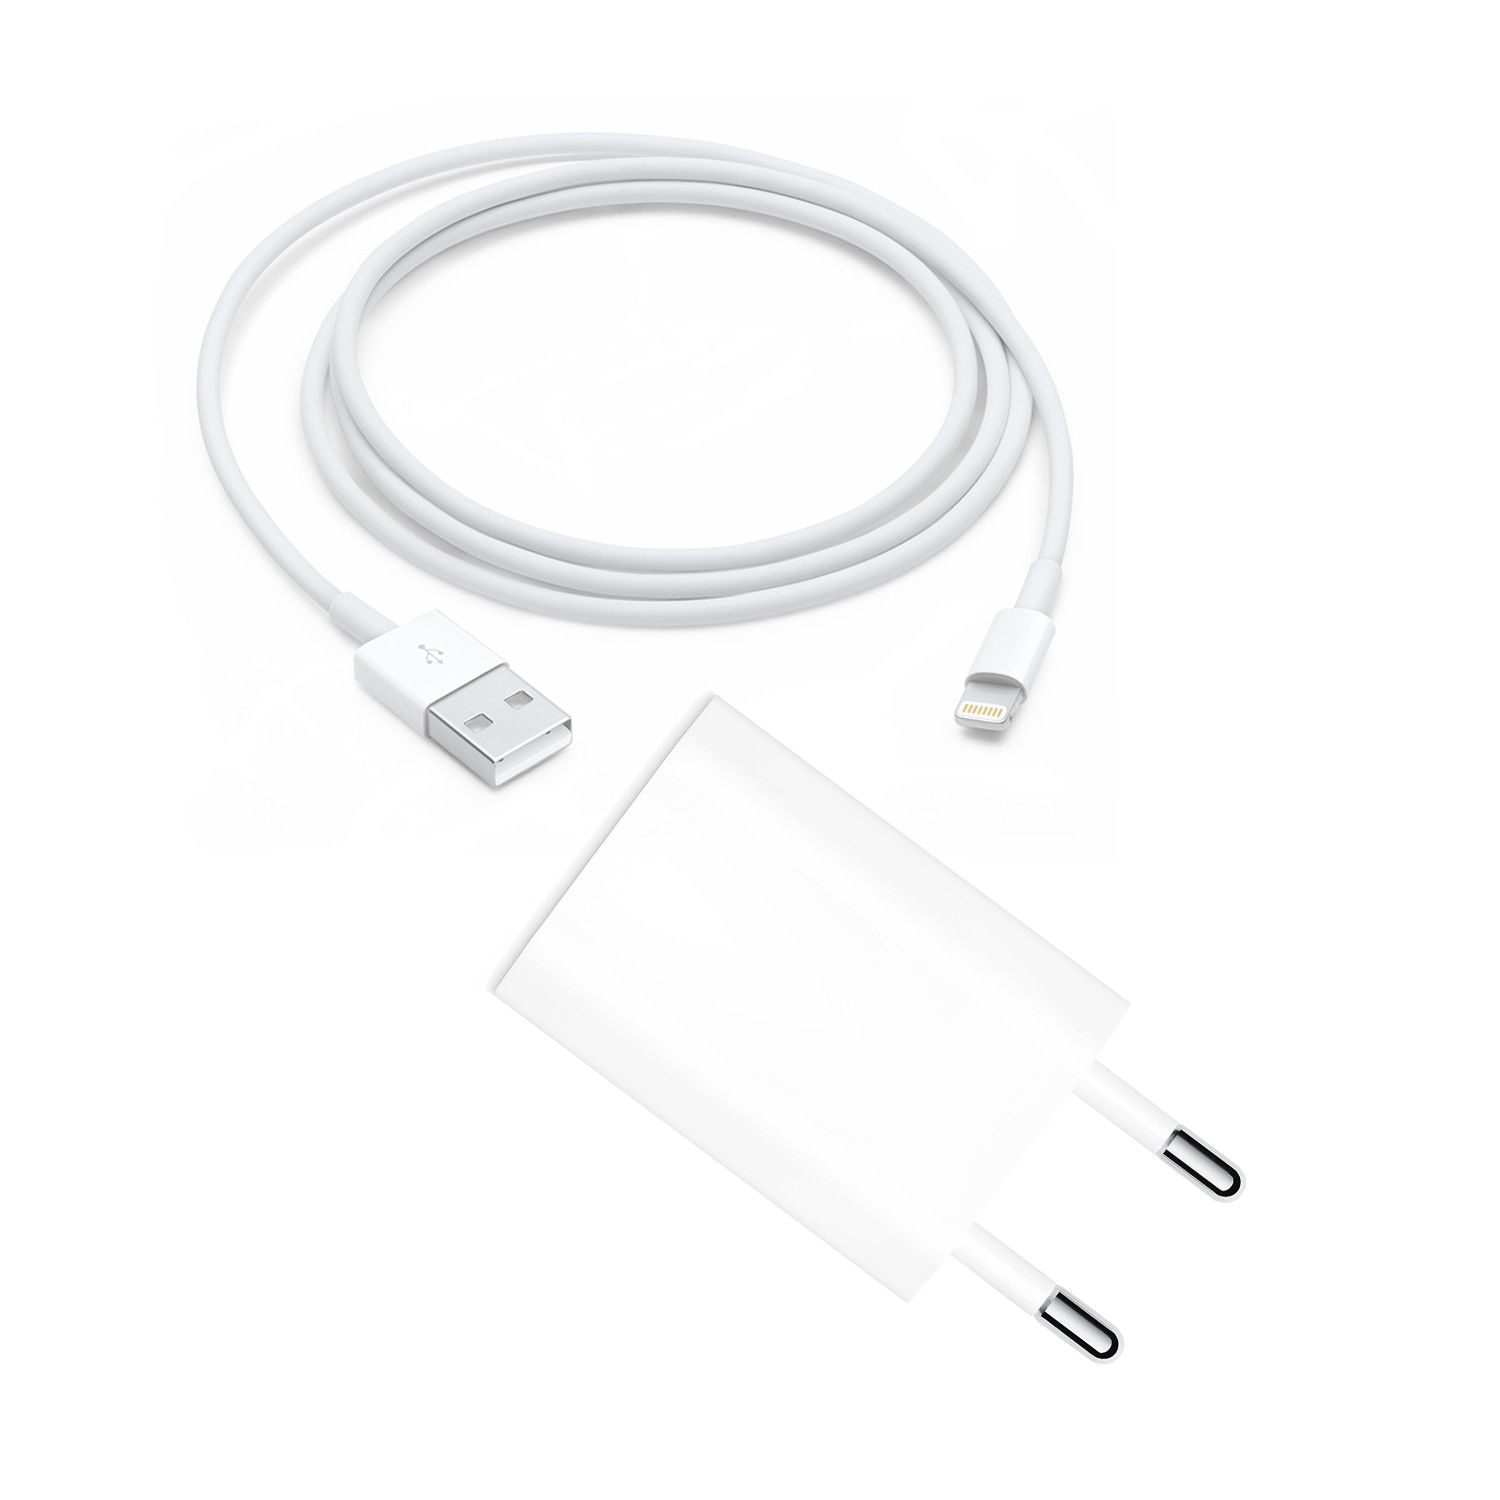 Incarcator compatibil Apple iPhone format din Adaptor iPhone Apple iPhone 5W Cablu USB cu mufa lightning 2m SmartGSM - eMAG.ro